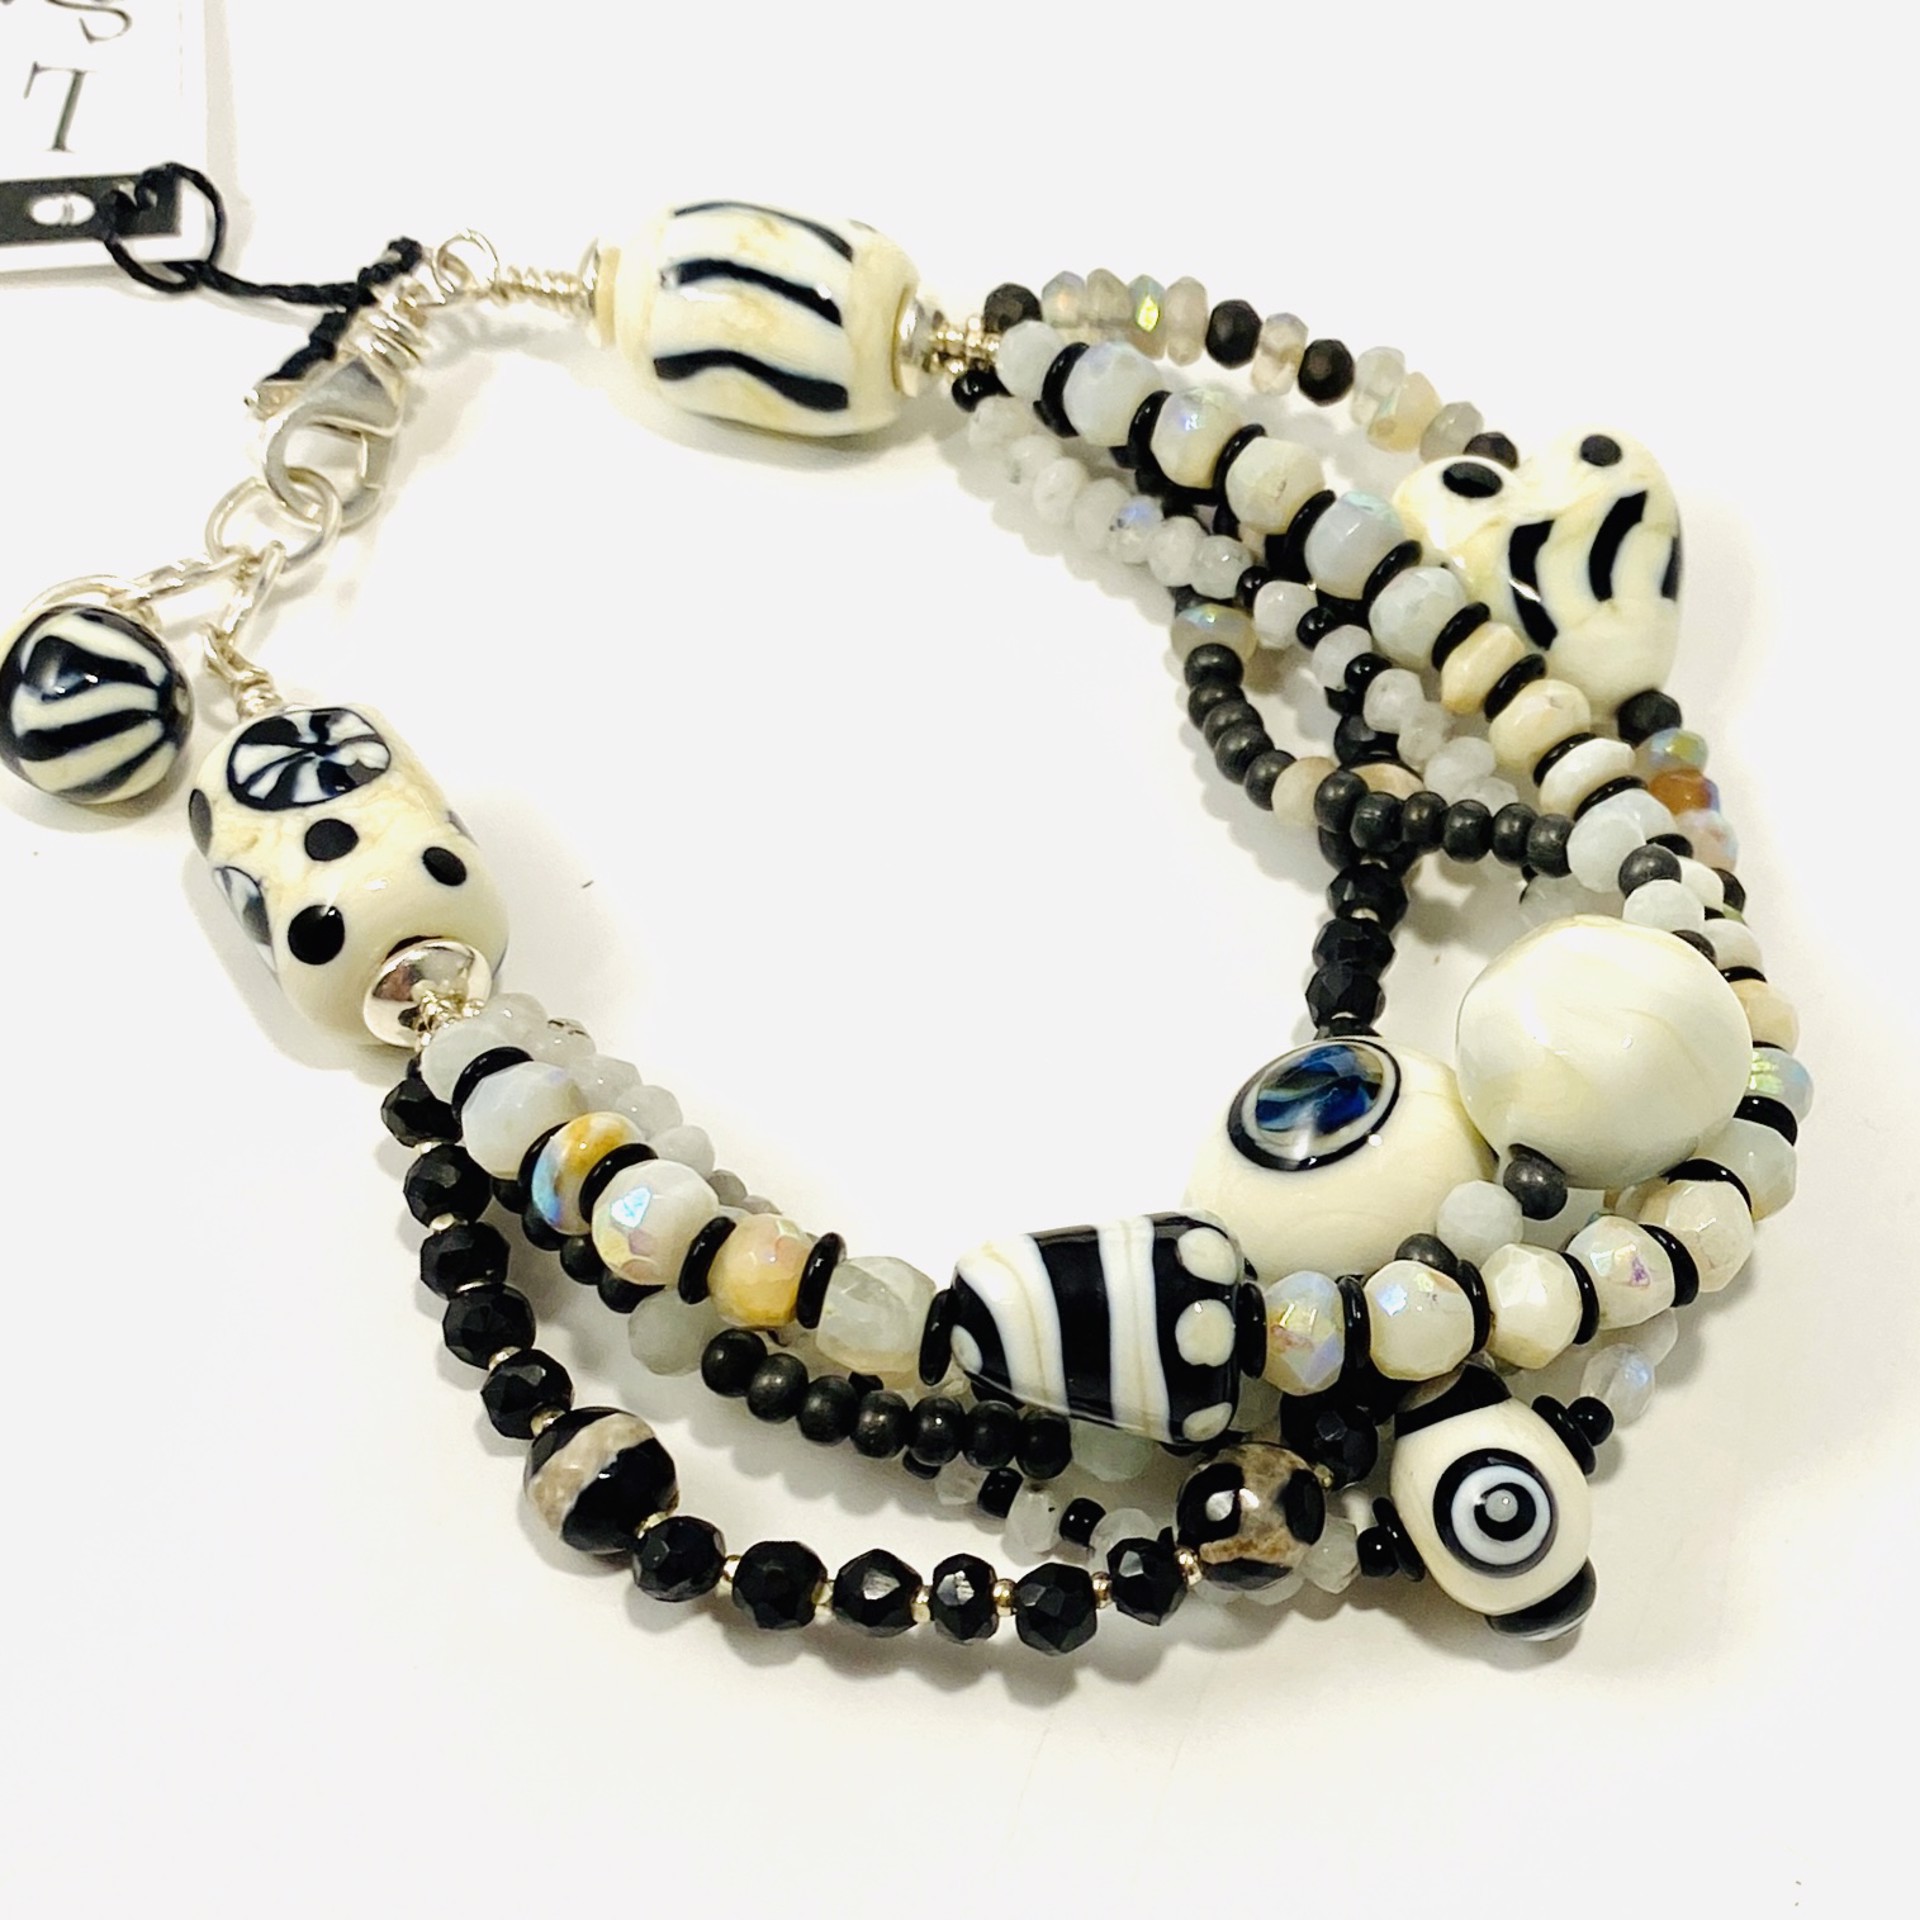 Five Strand Mix Black and White Glass Beads Gemstone Beads Bracelet LS23-18 by Linda Sacra